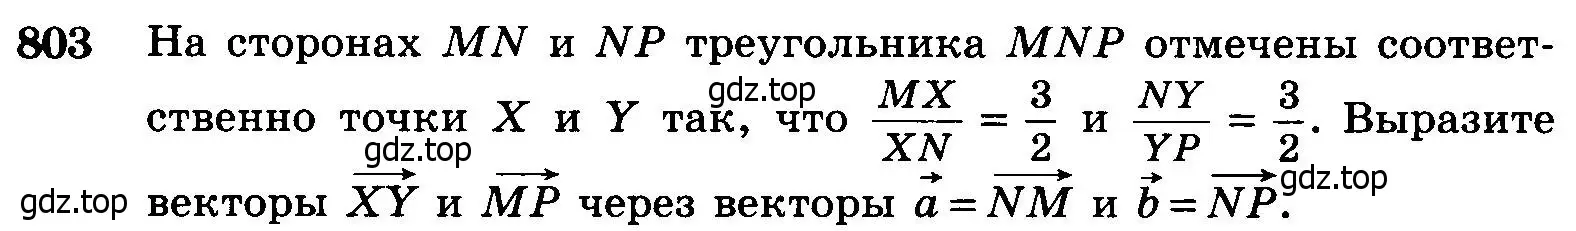 Условие номер 803 (страница 210) гдз по геометрии 7-9 класс Атанасян, Бутузов, учебник